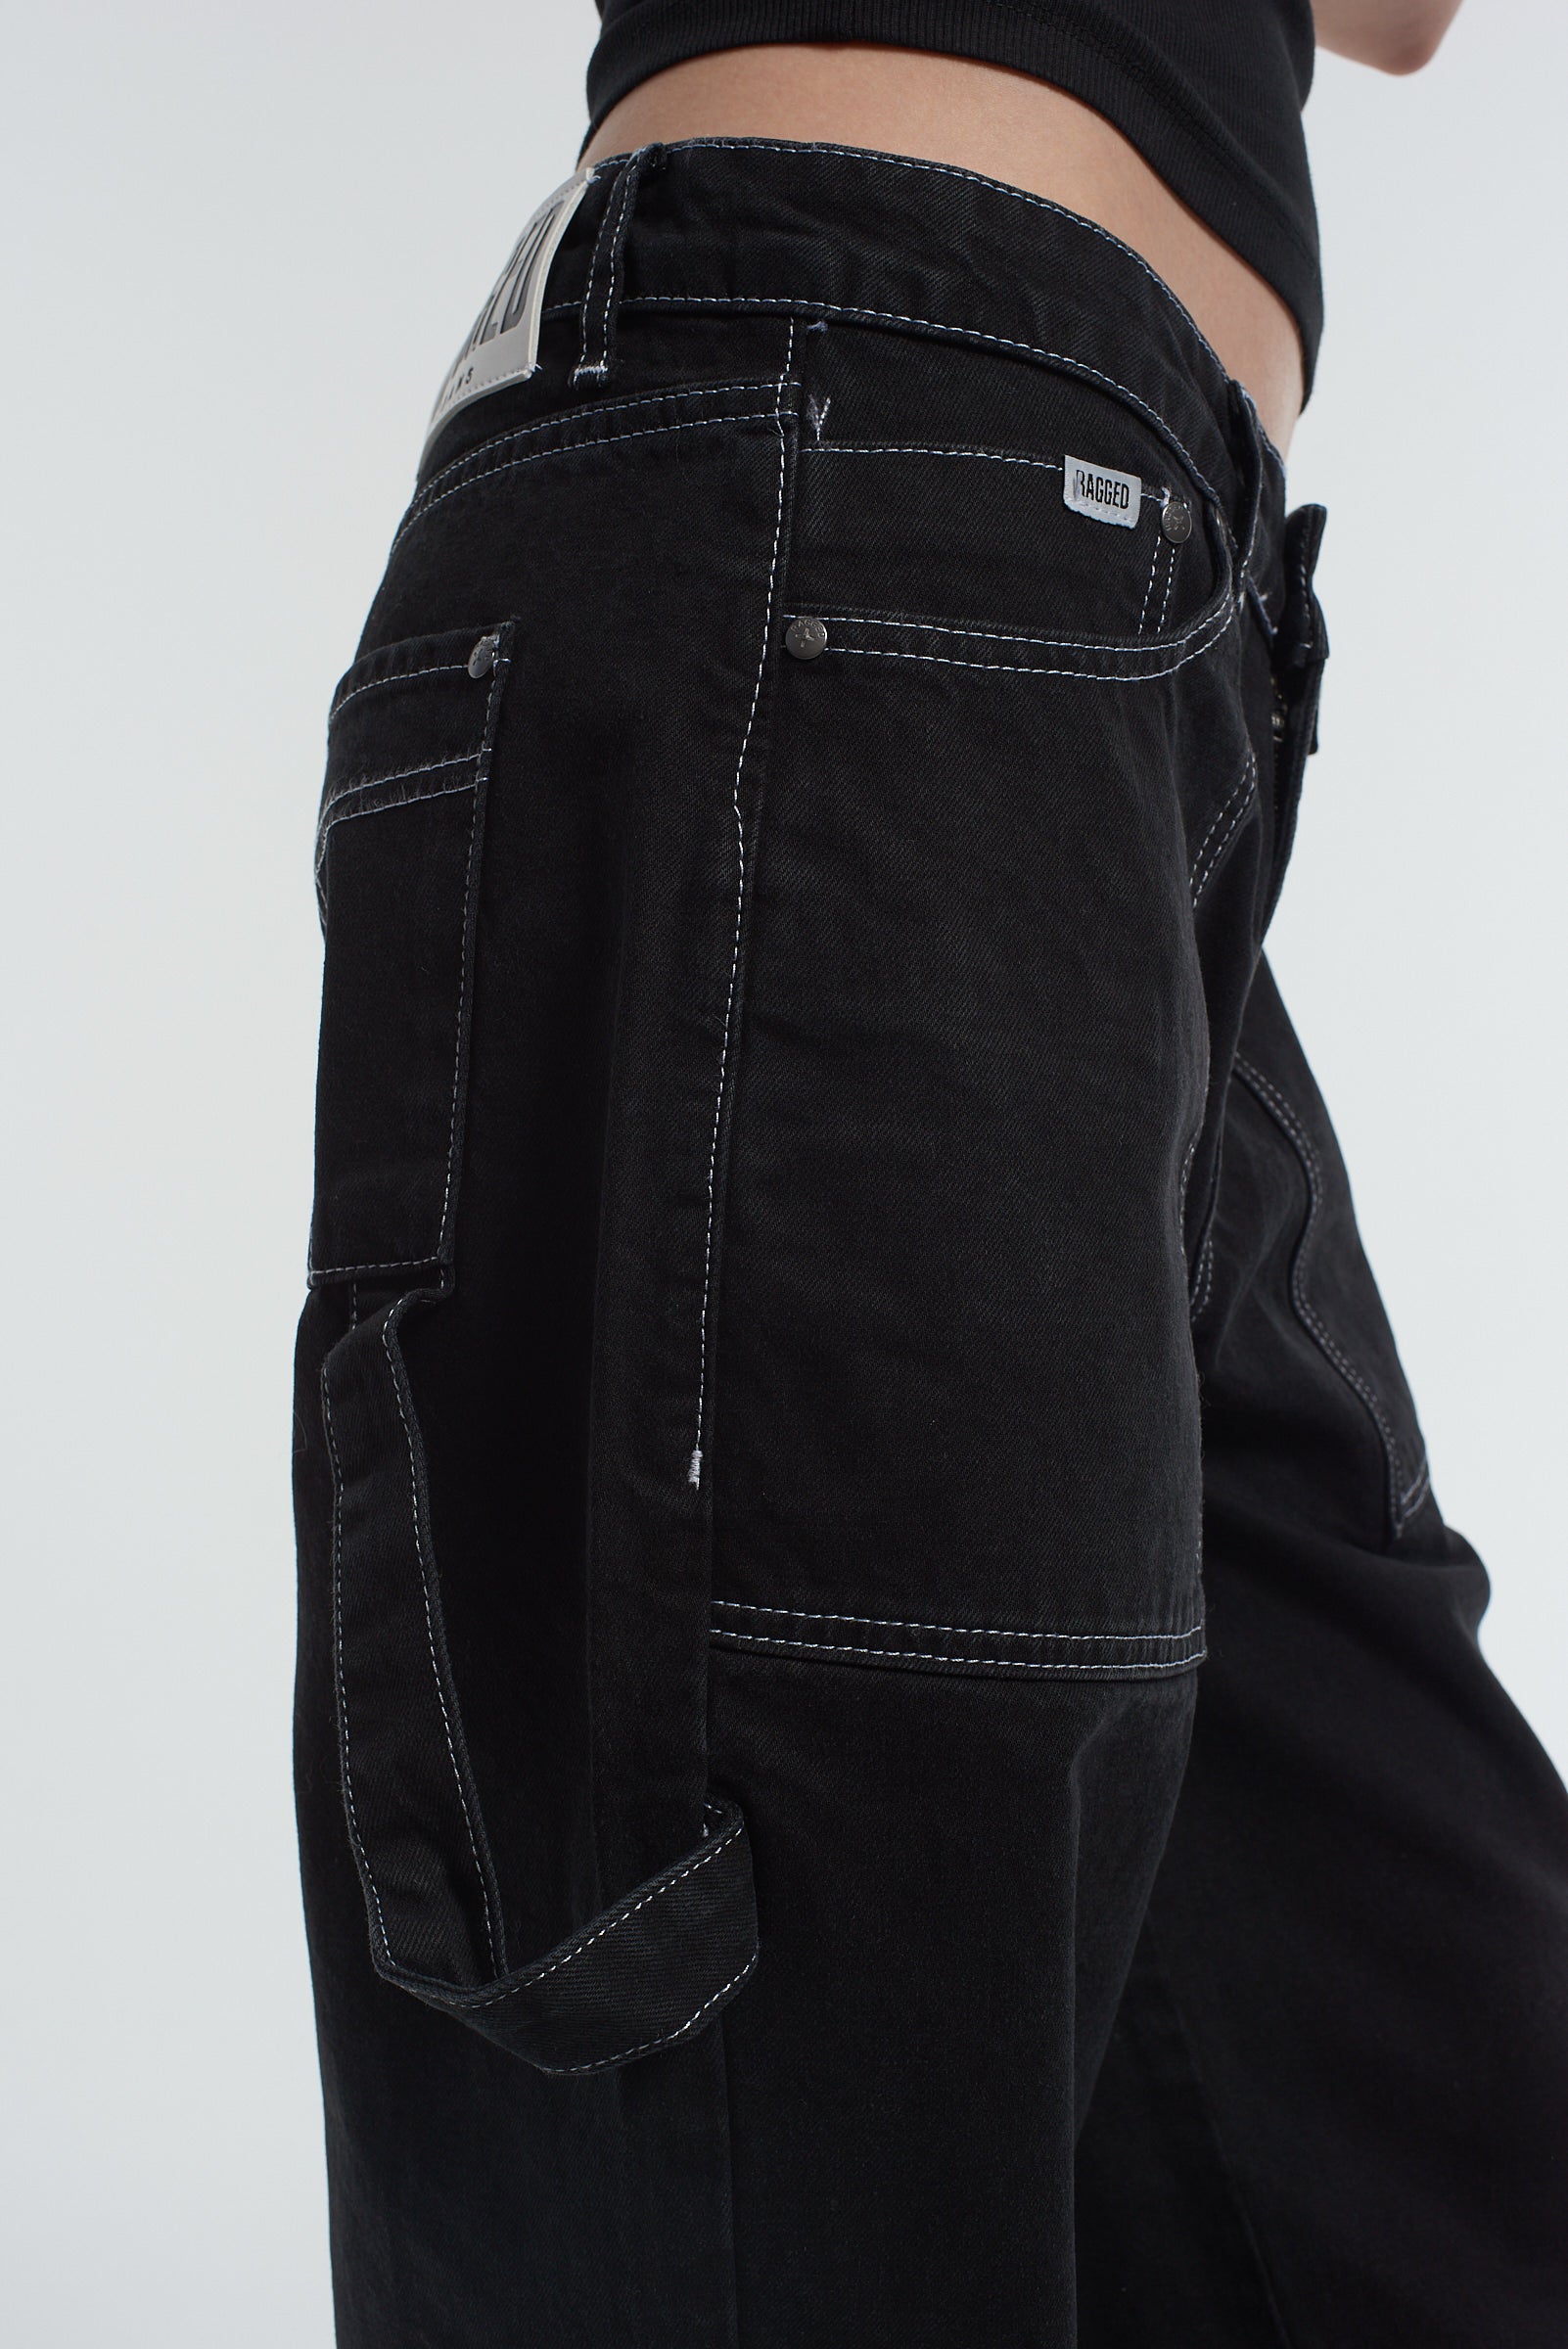 Carpenter Jeans - Charcoal Black